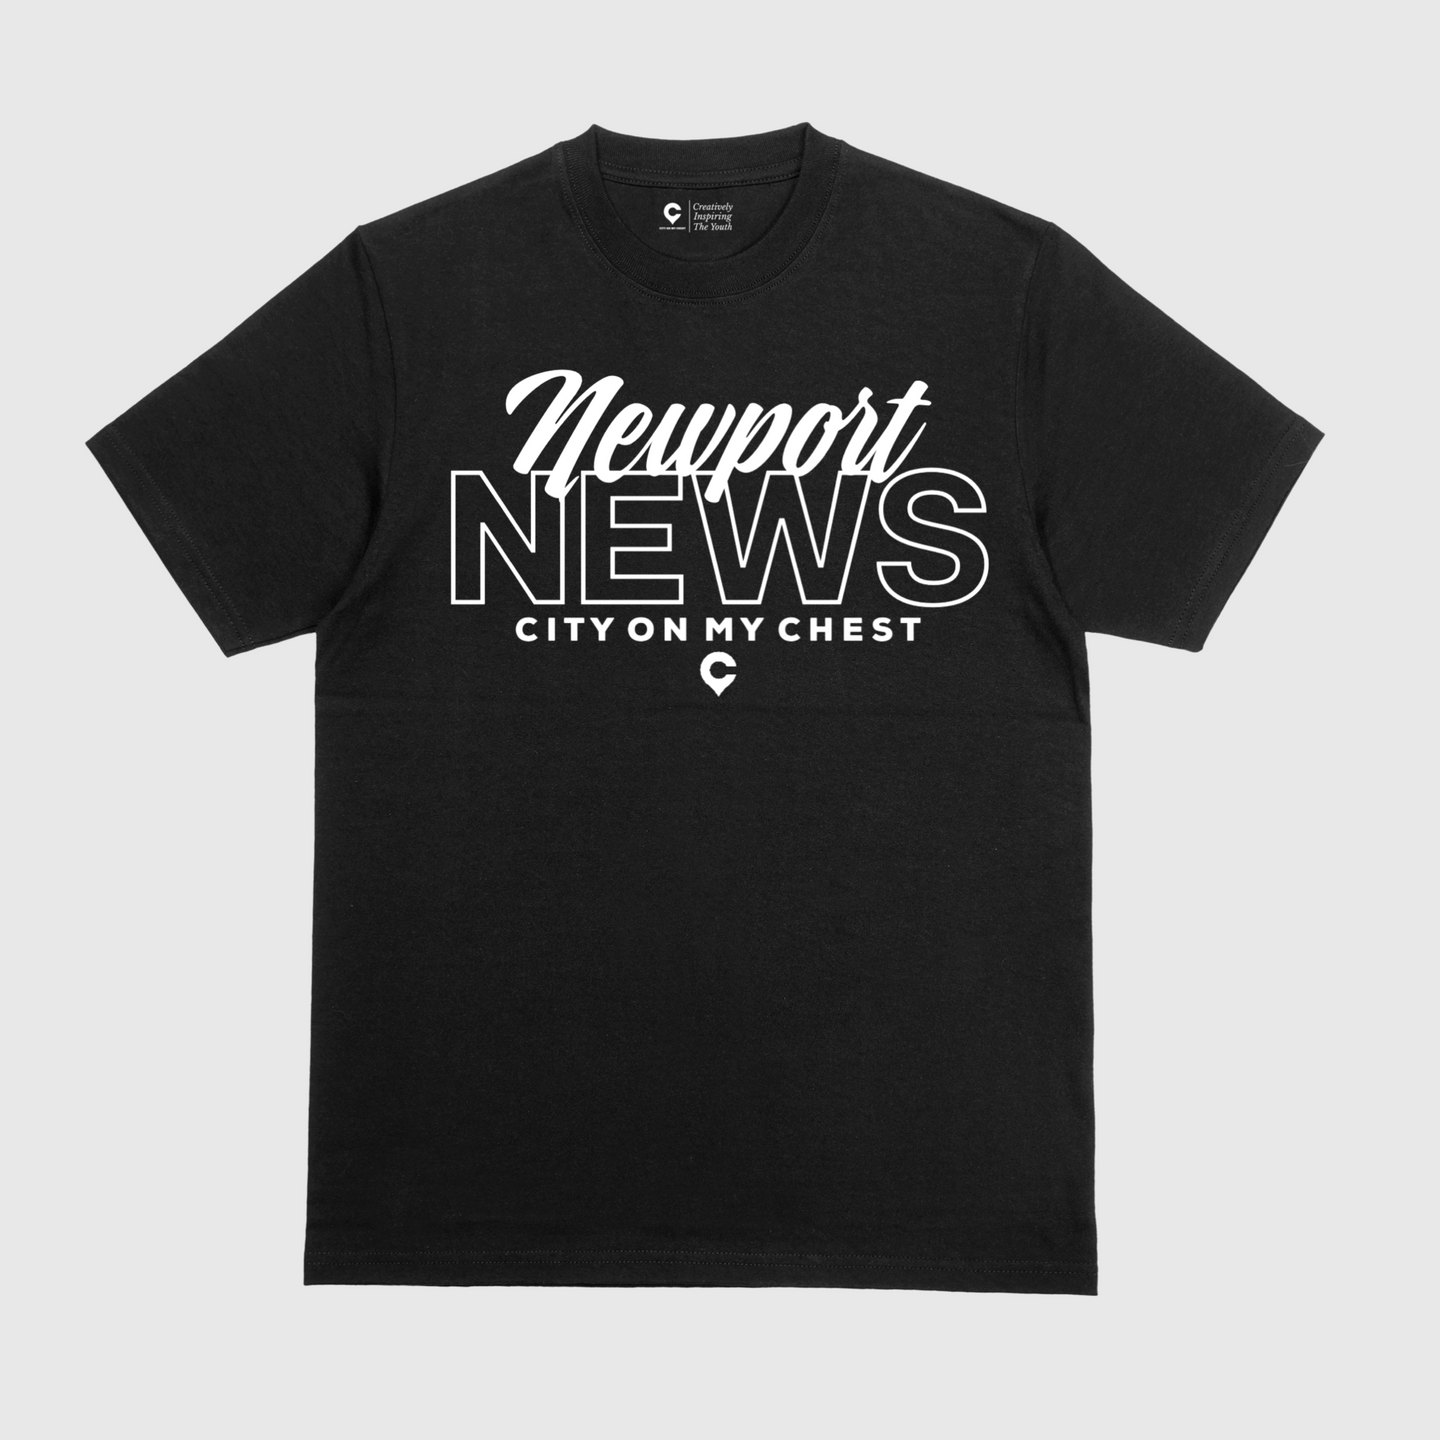 Newport News T-Shirt (Black)